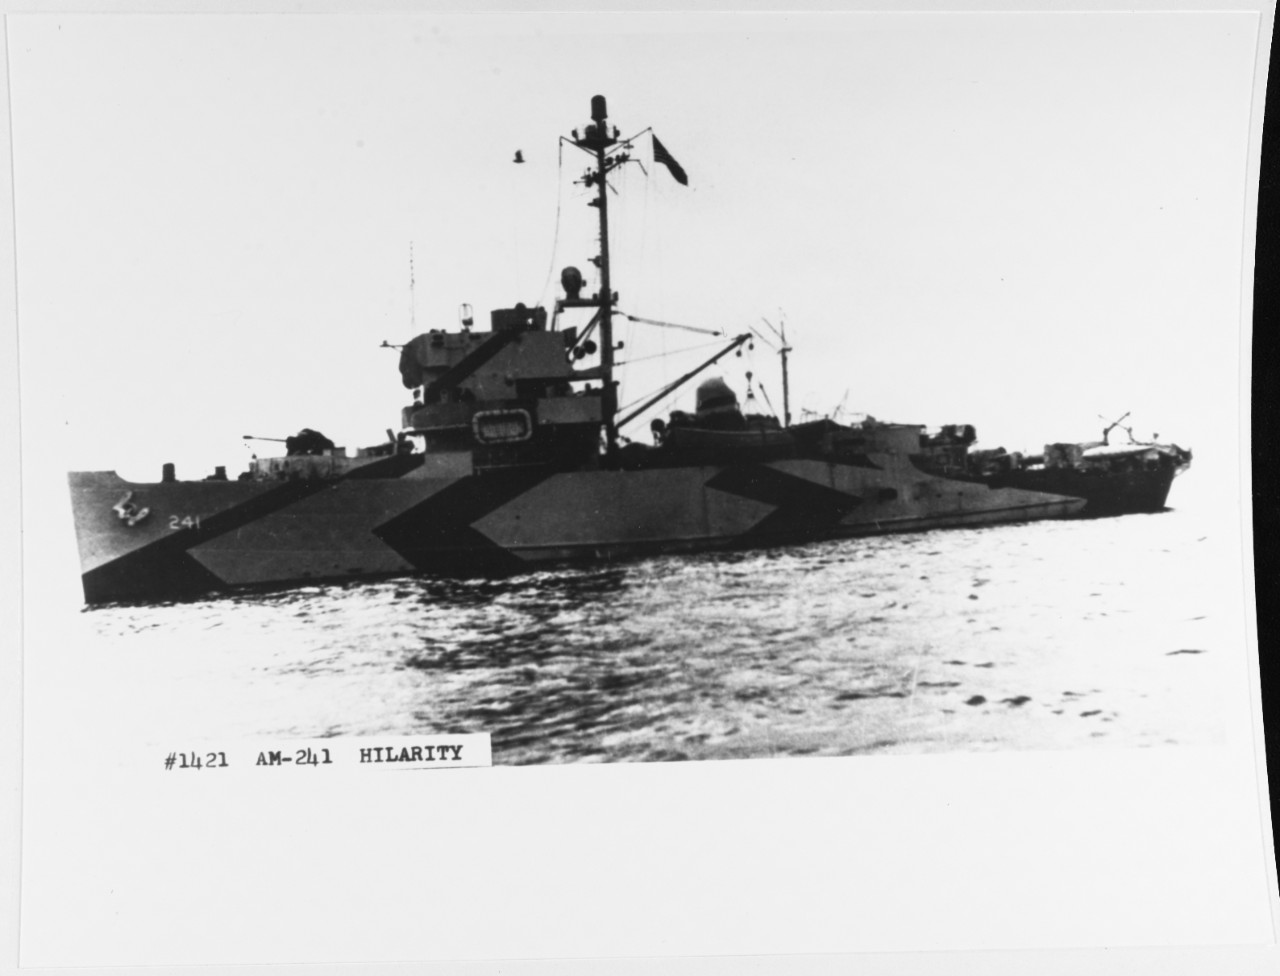 USS HILARITY (AM-241)